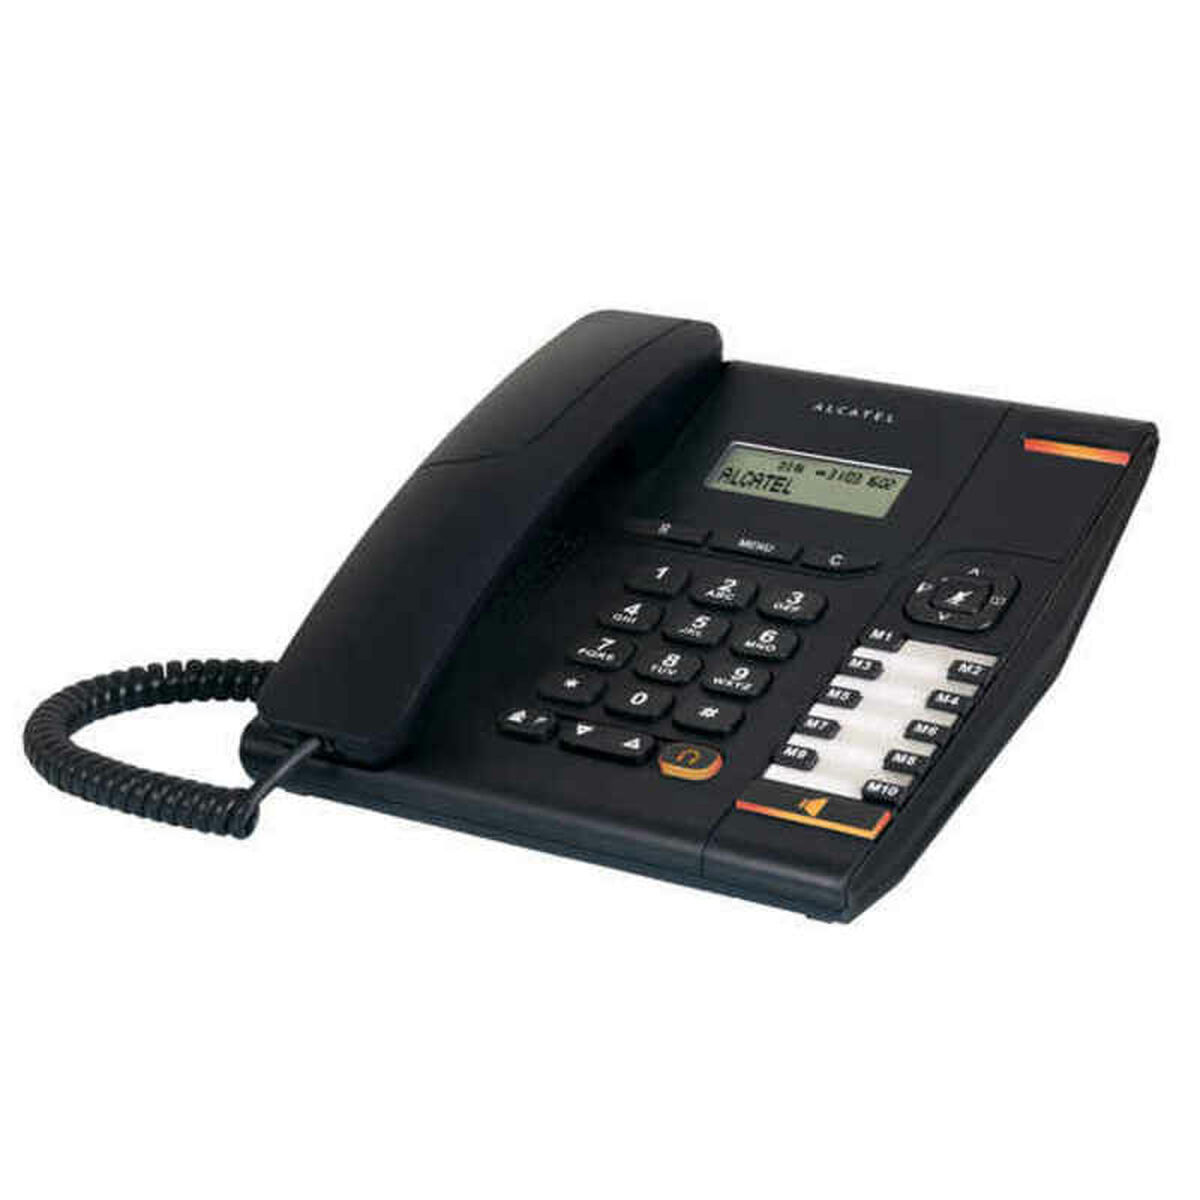 Telefon Fix Alcatel Temporis 580